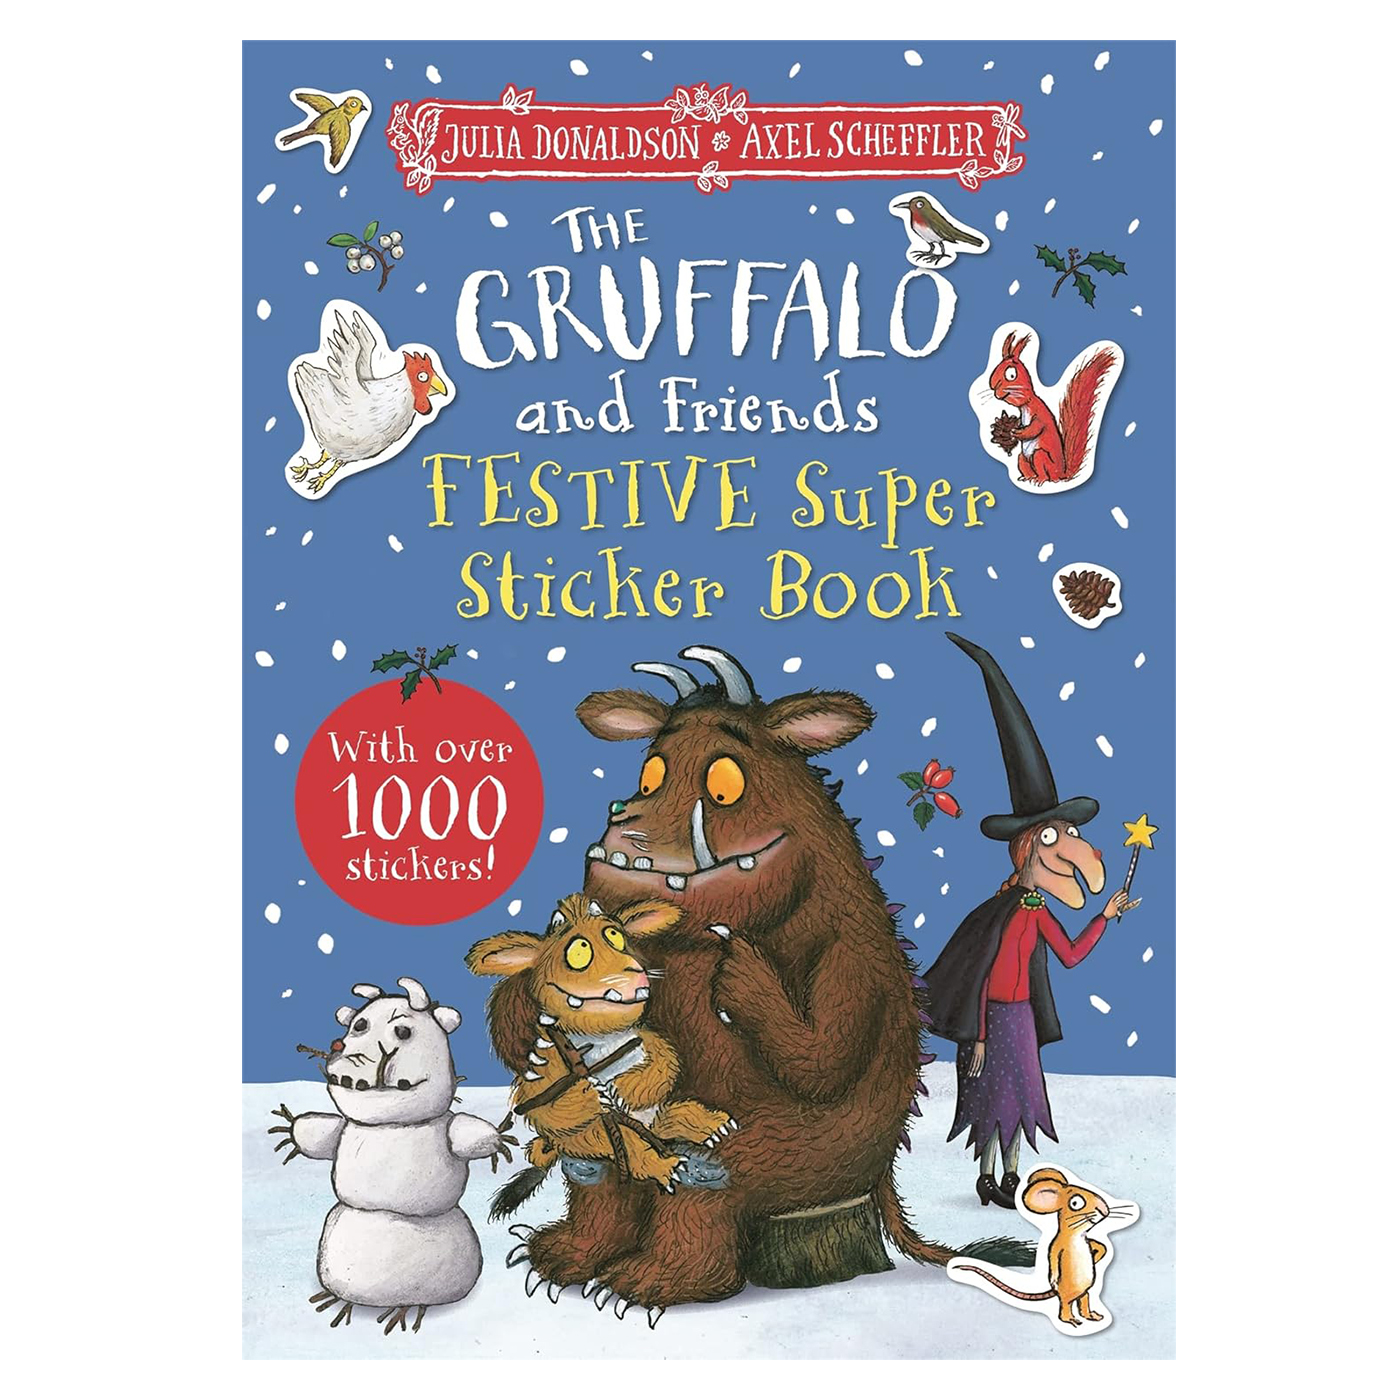  The Gruffalo and Friends Festive Super Sticker Book